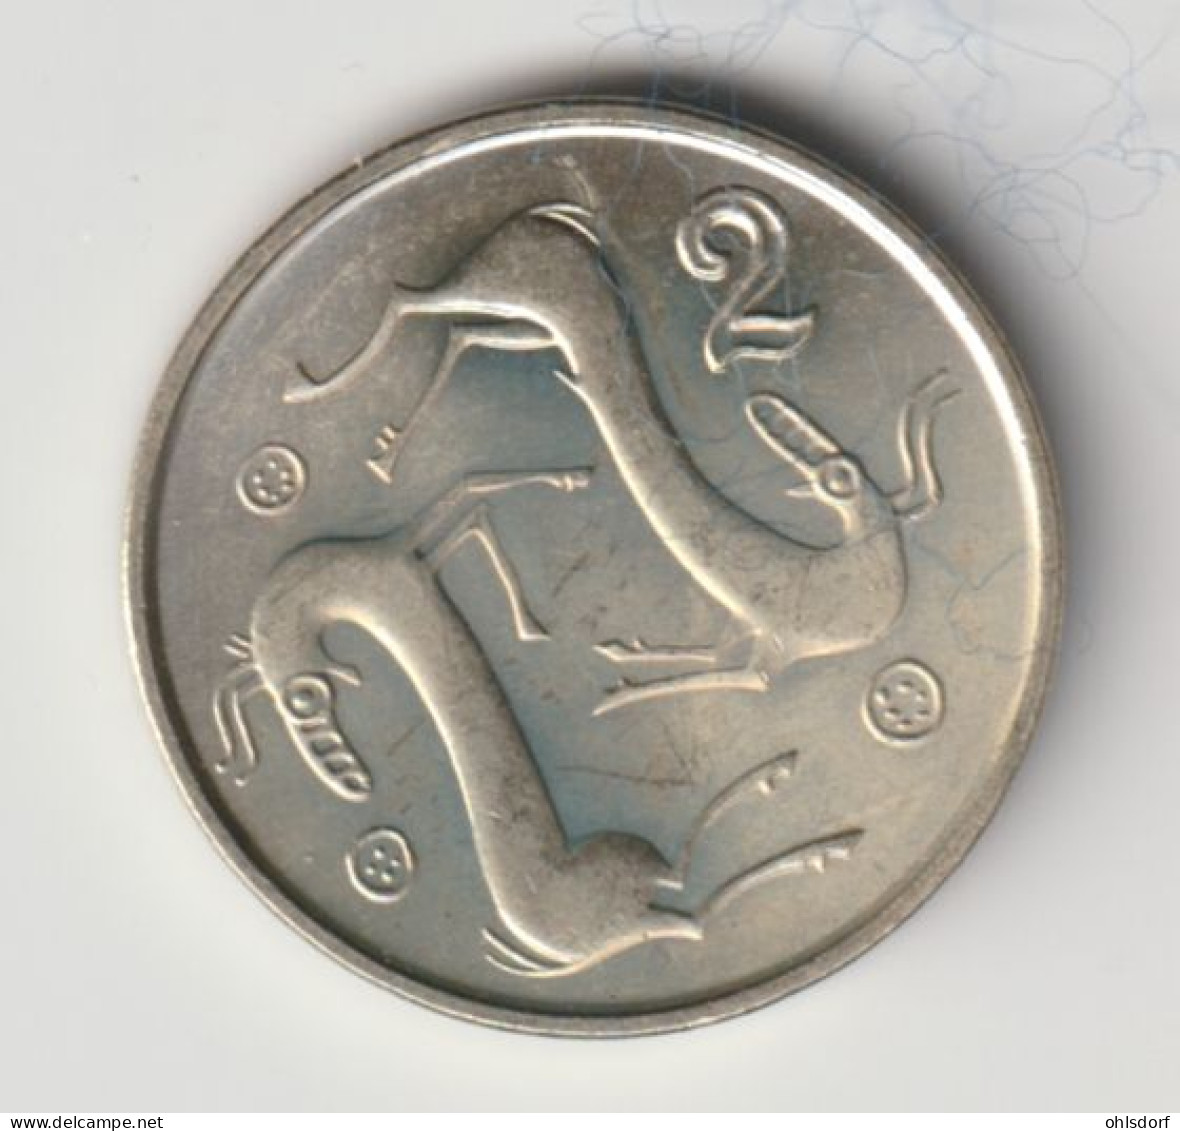 CYPRUS 1996: 2 Cents, KM 54.3 - Zypern